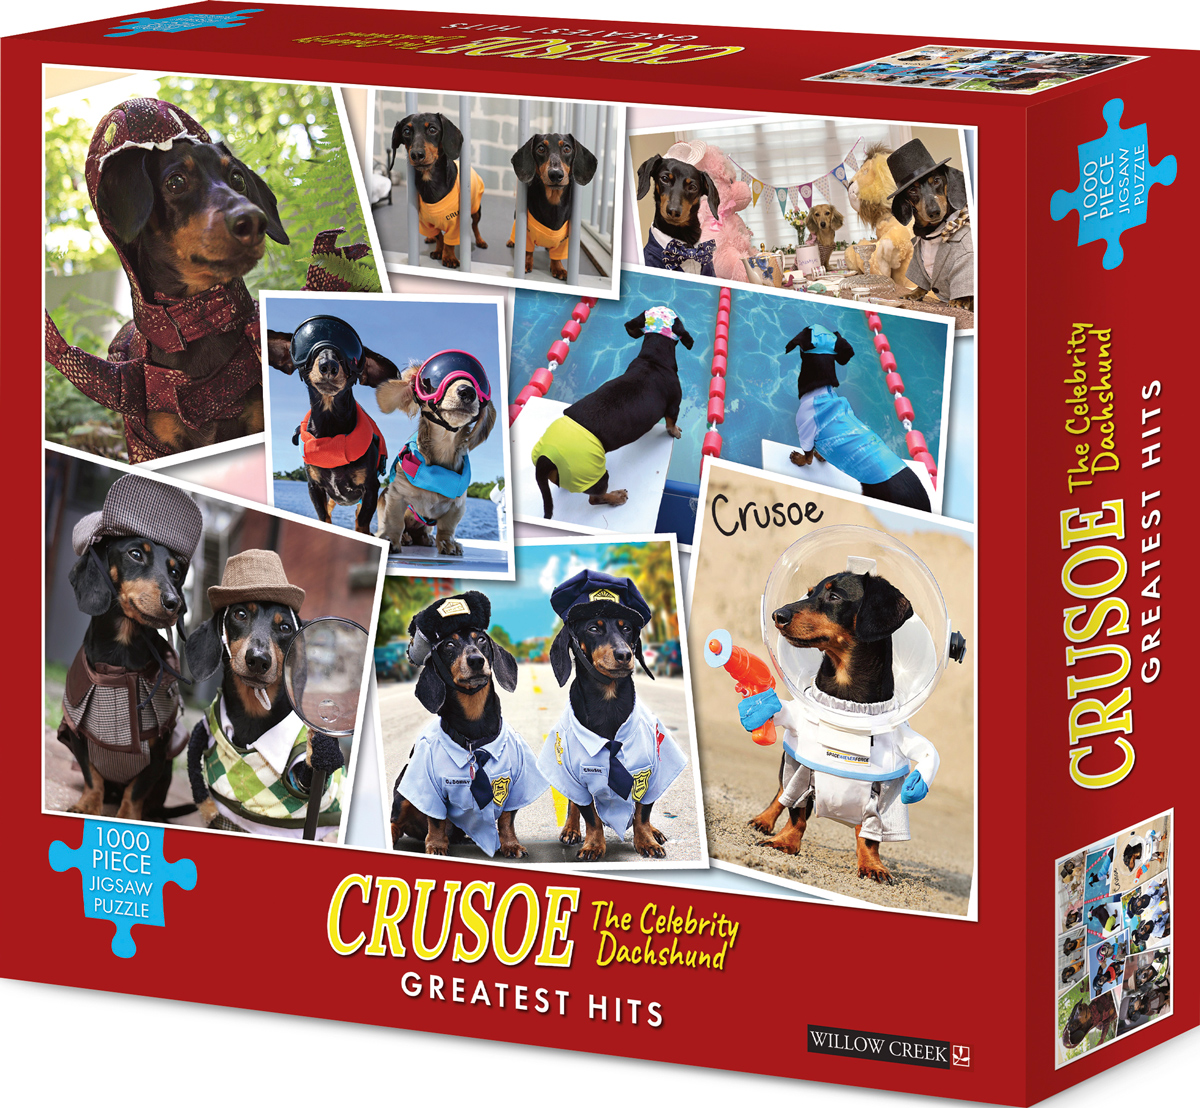 Crusoe's Greatest Hits